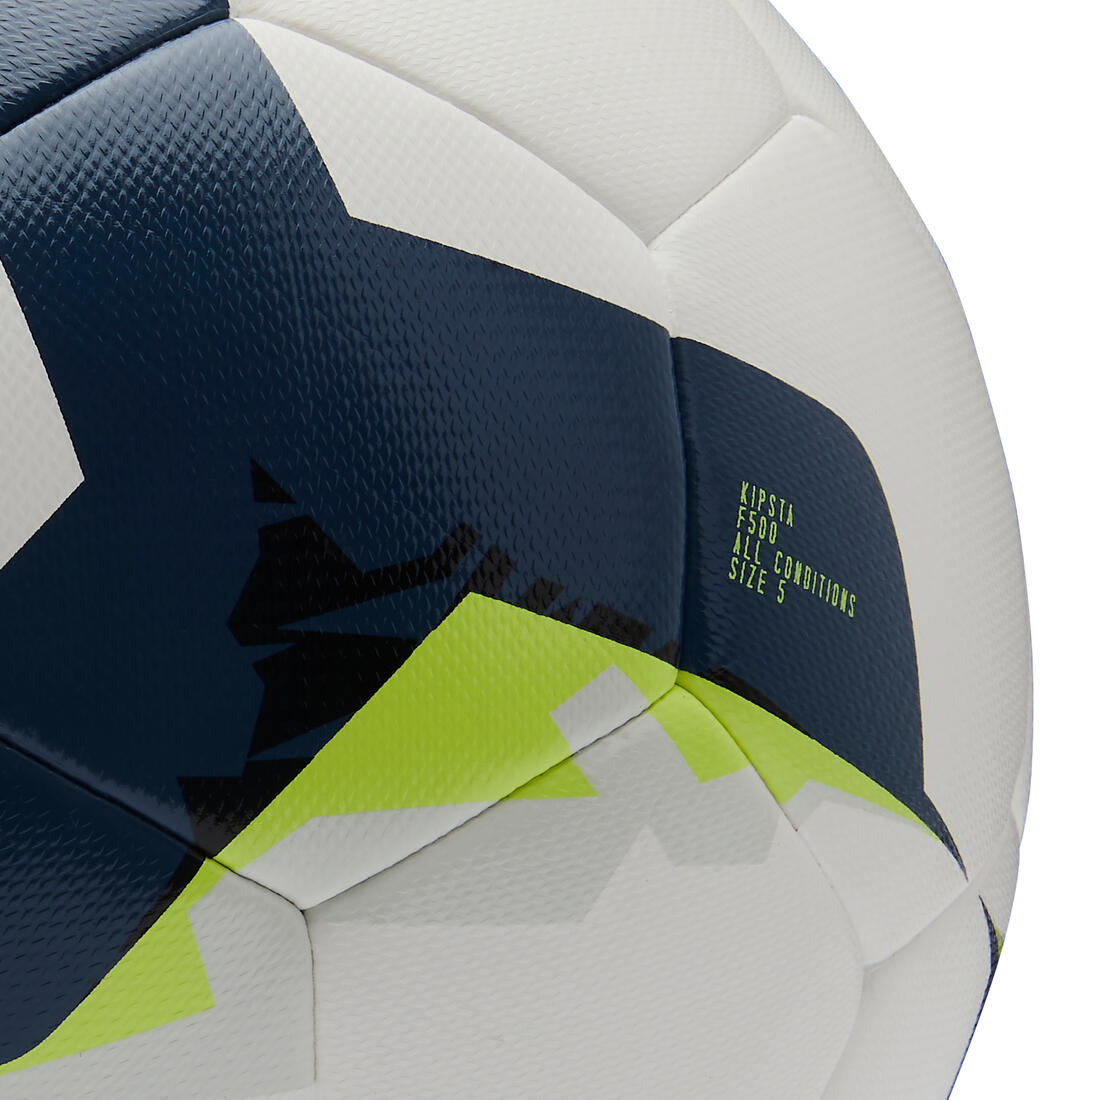 KIPSTA(キプスタ) サッカー ボール5号 ハイブリッド FIFA Basic F500